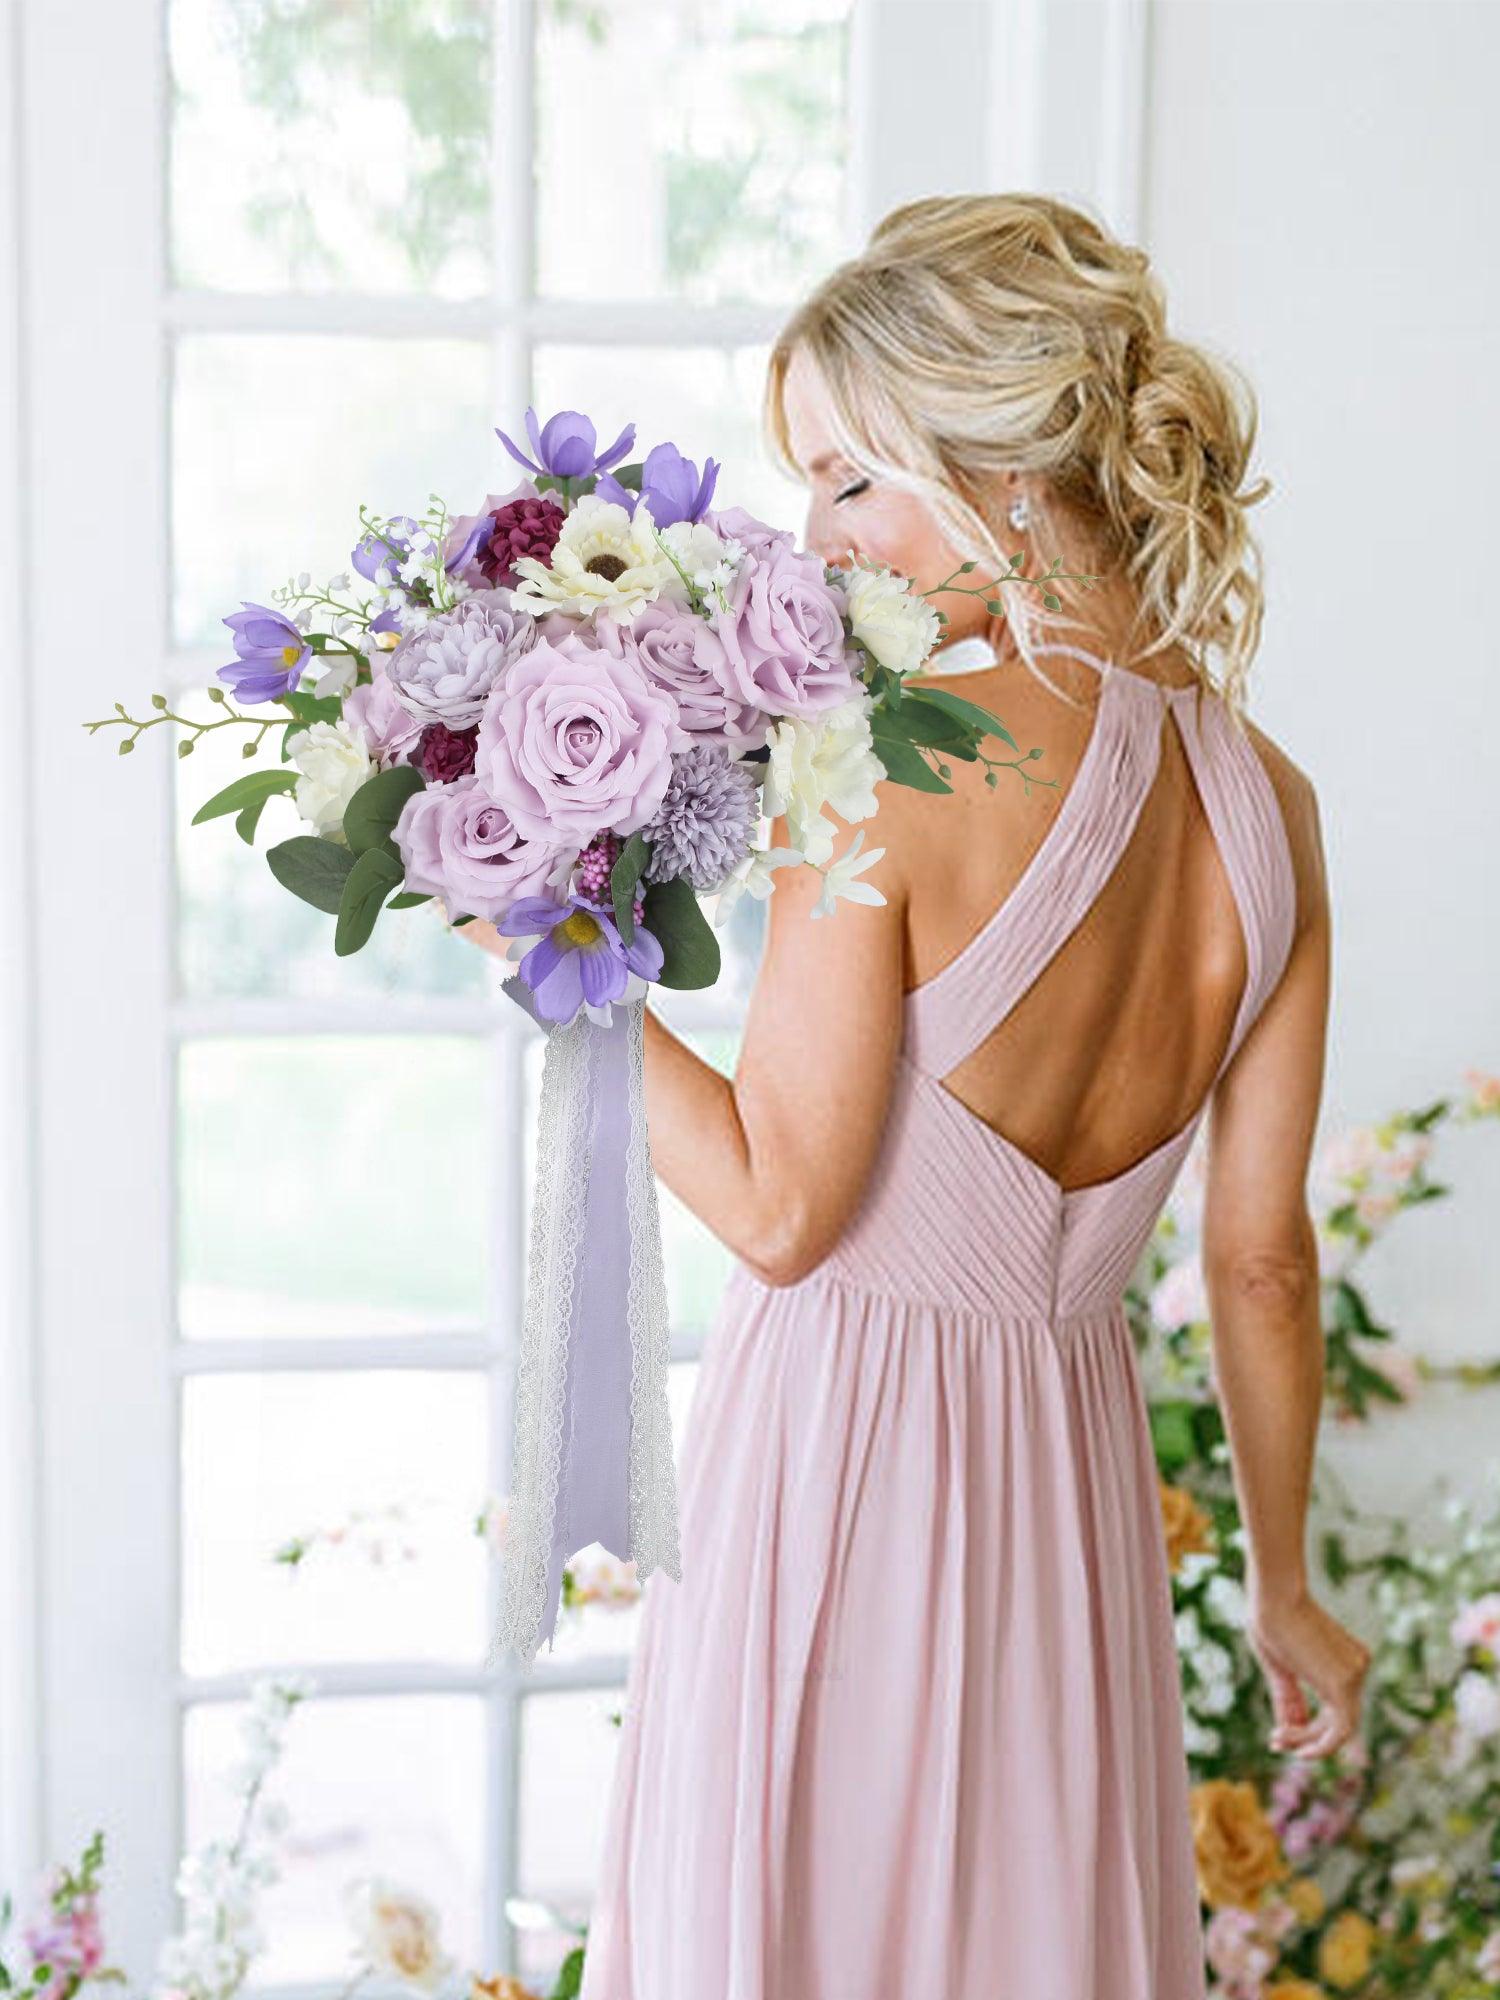 11.7 inch wide Pastel Purple Bridal Bouquet - Rinlong Flower